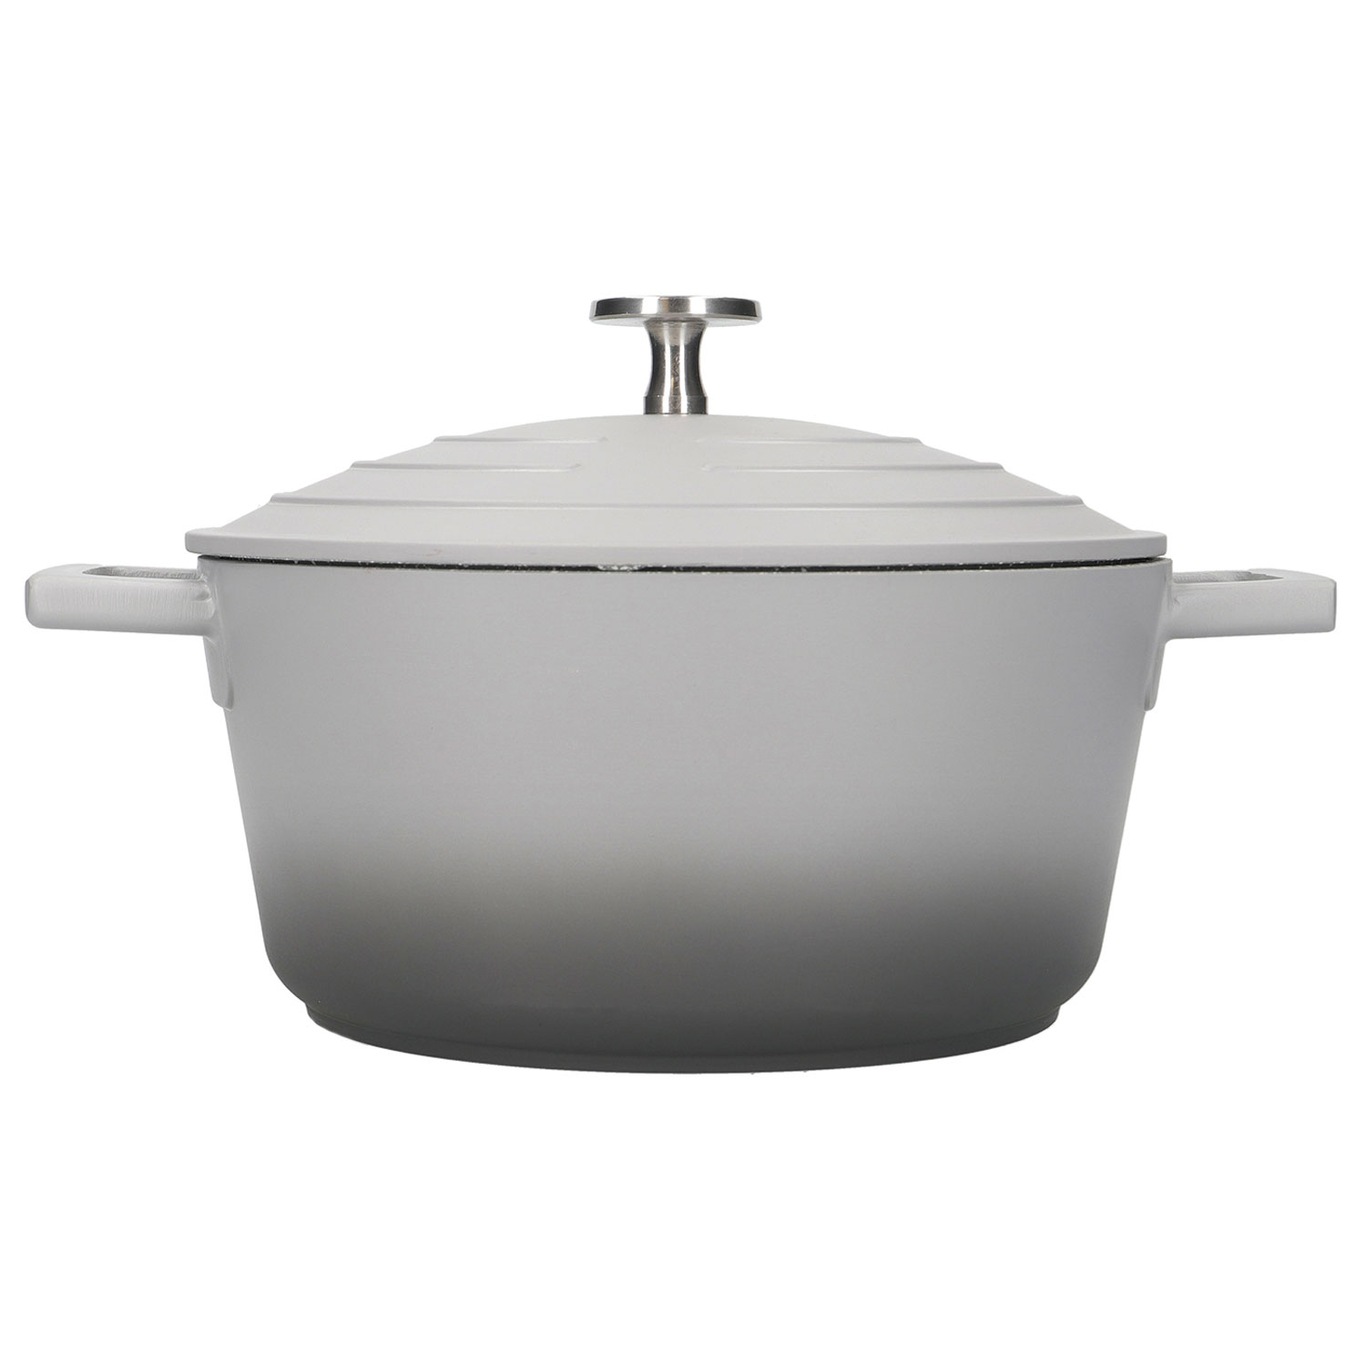 https://royaldesign.com/image/2/kitchen-craft-masterclass-casserole-grey-3?w=800&quality=80